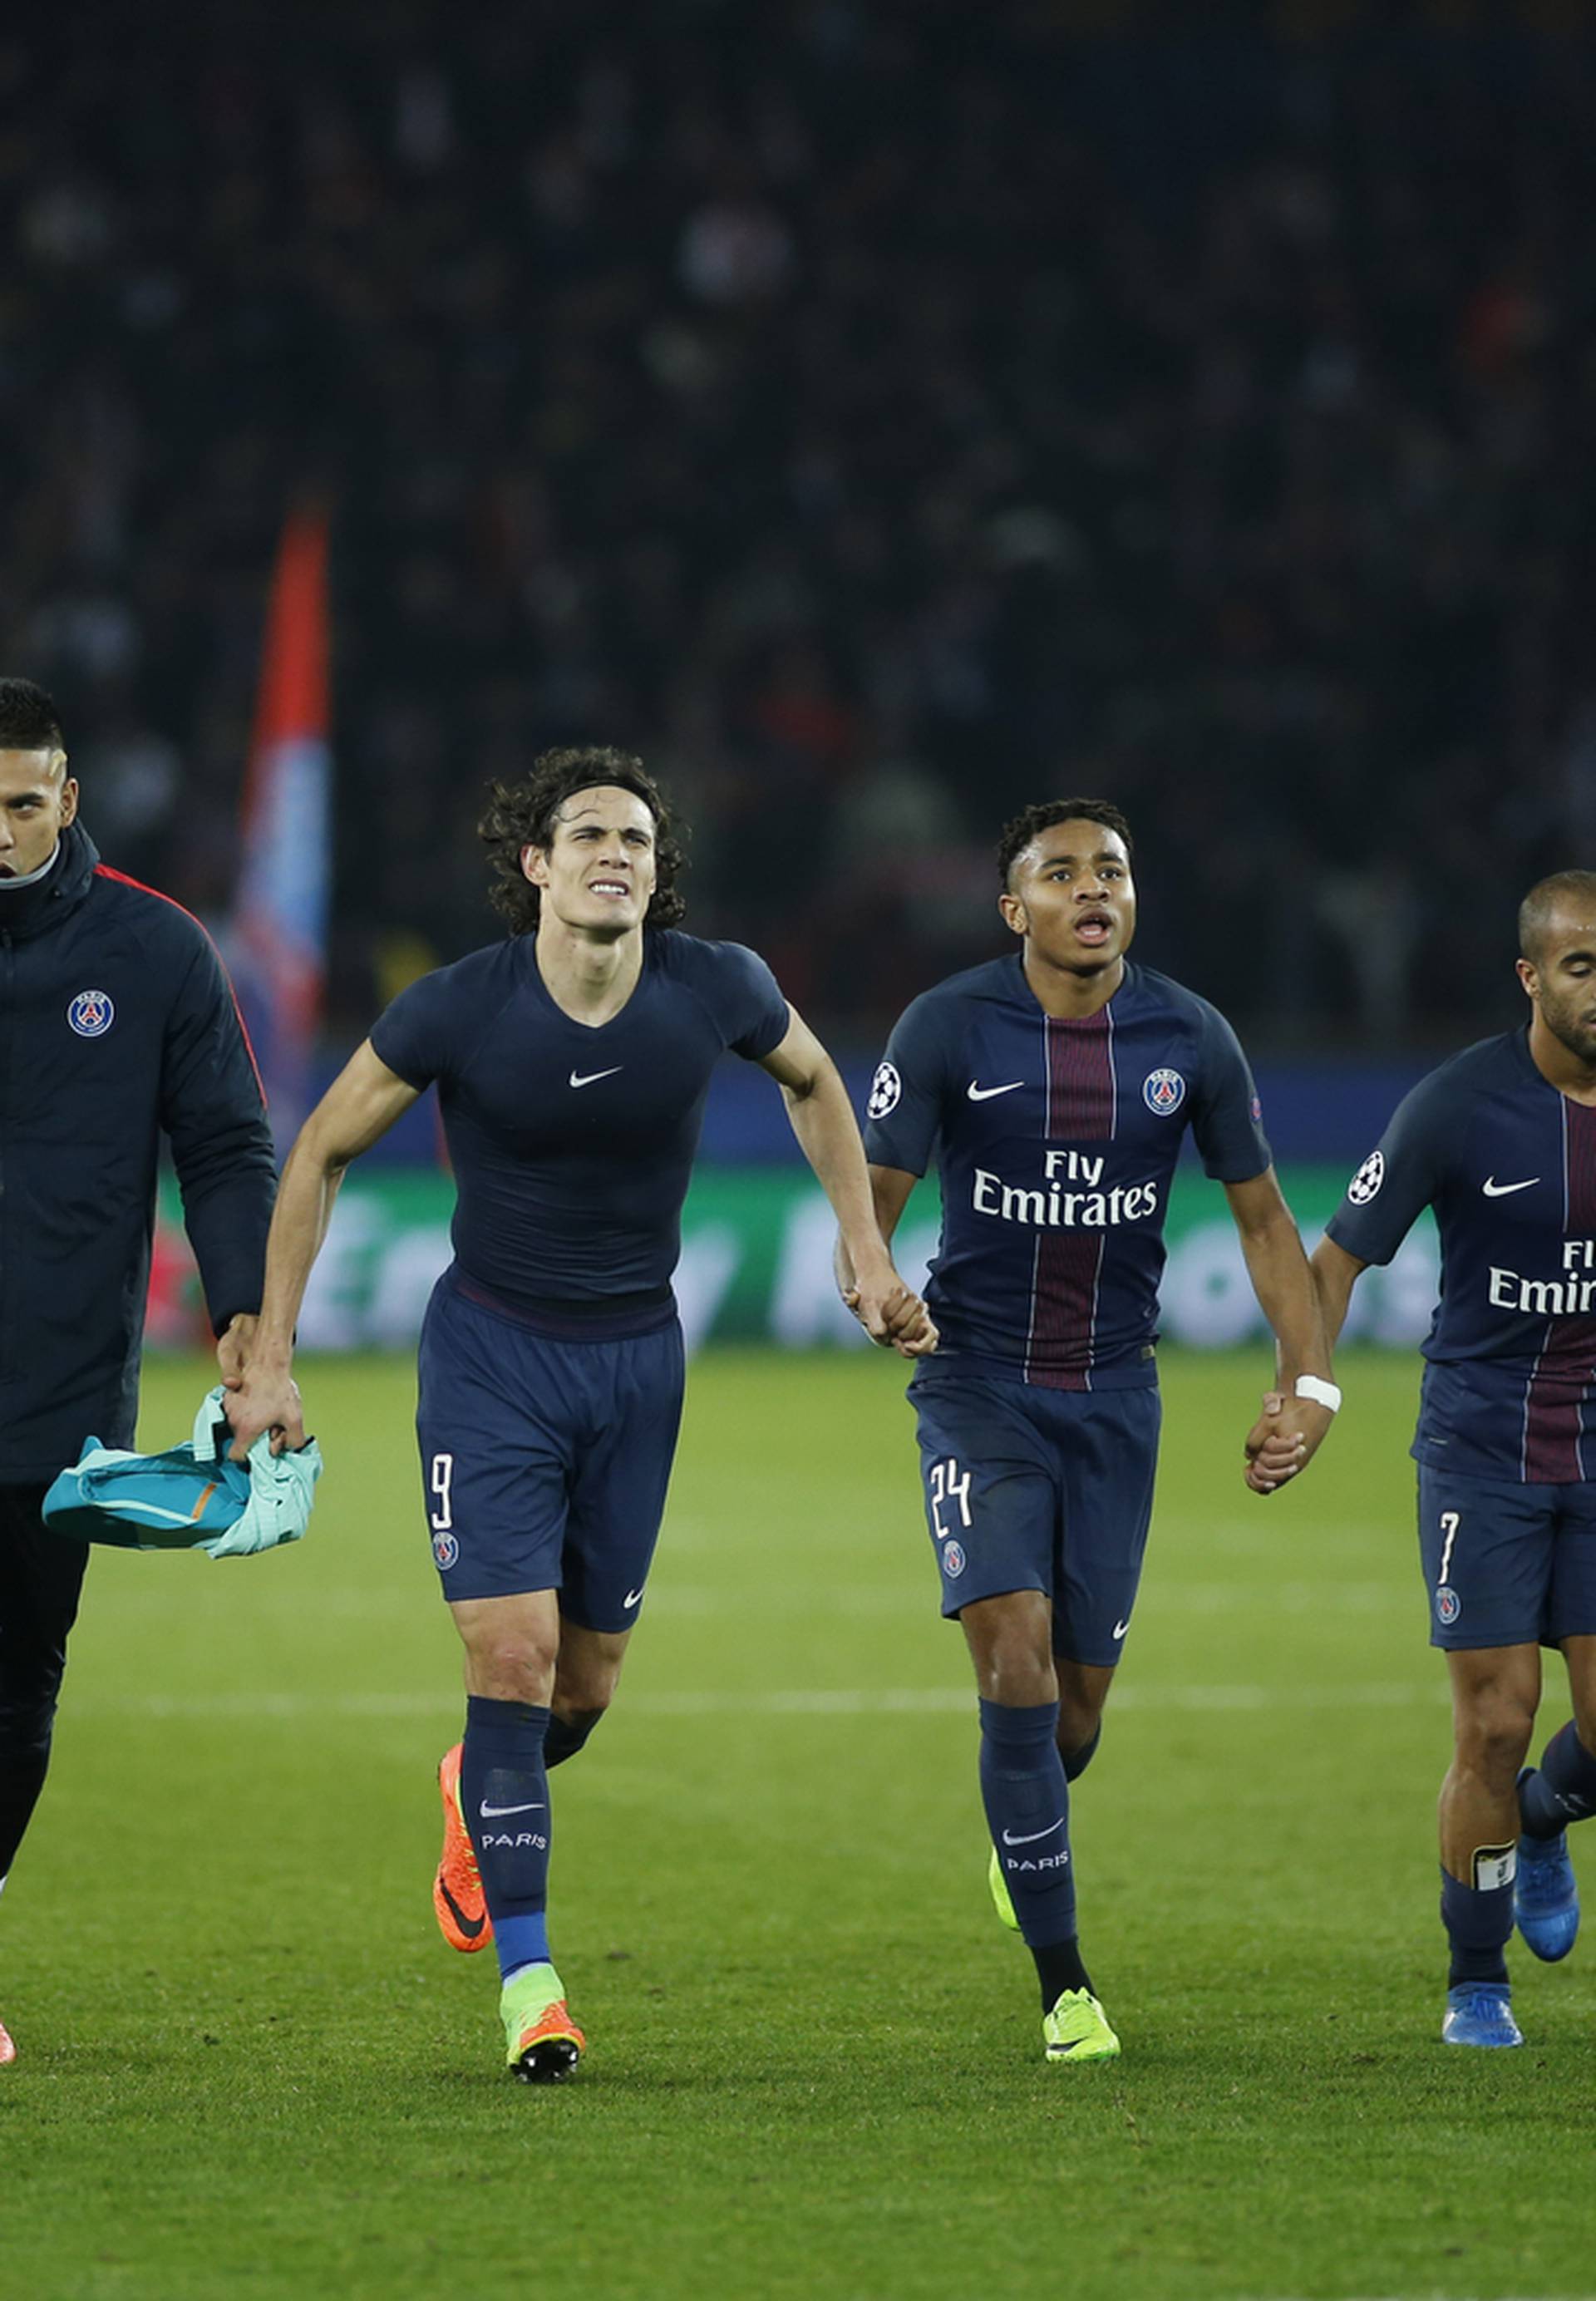 Paris Saint-Germain's players celebrate after the game